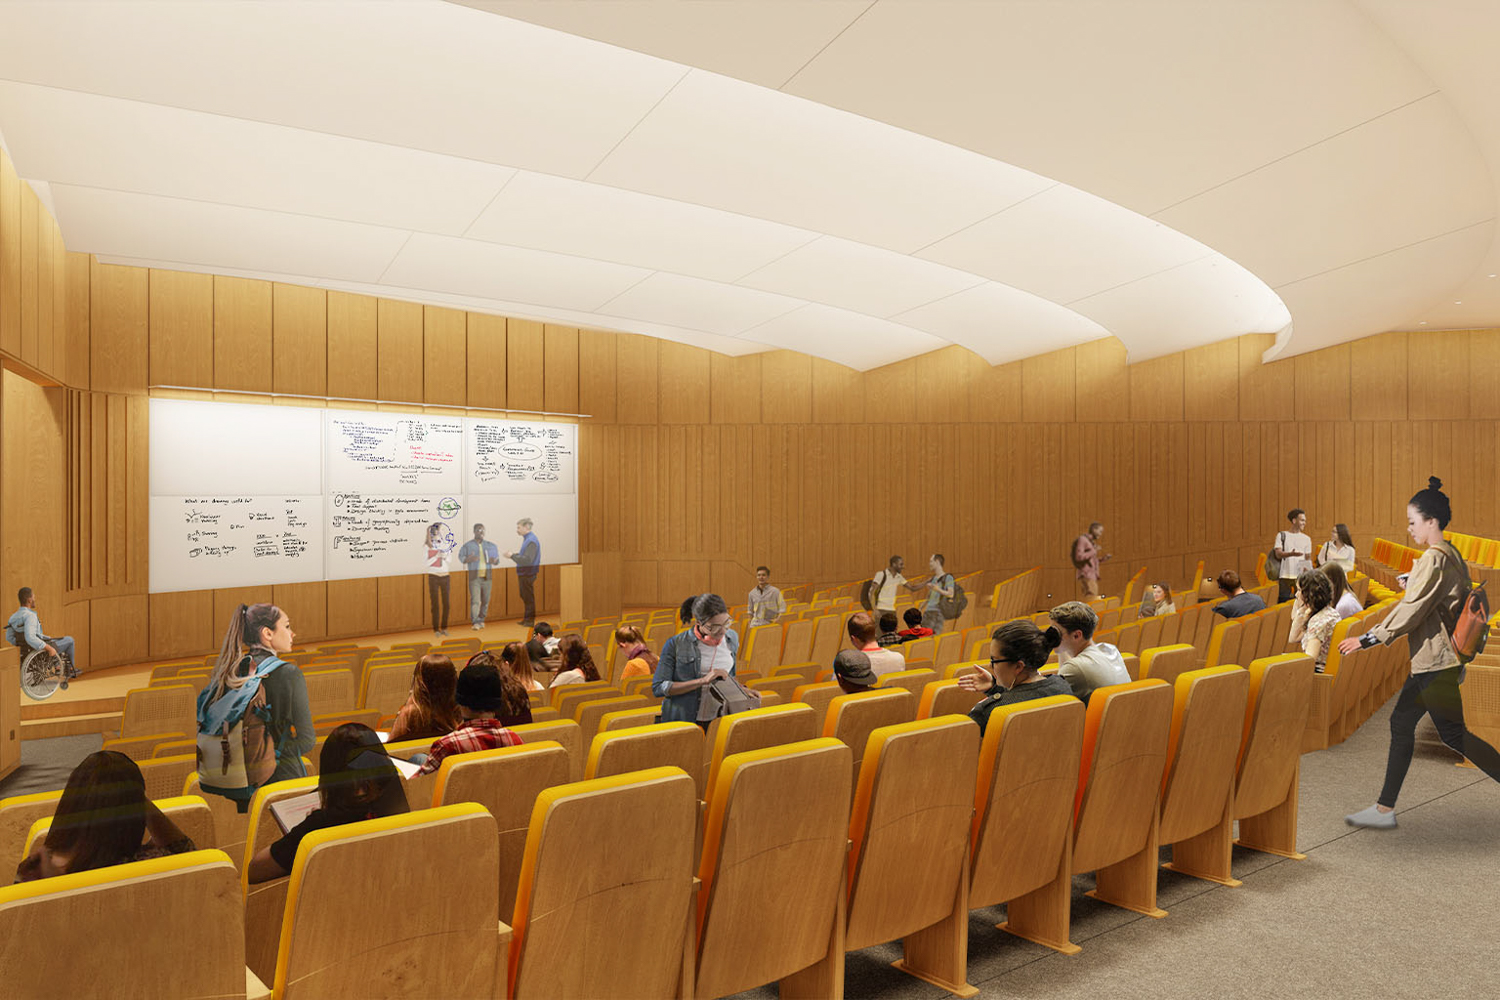 UC Berkeley’s Gateway Building classroom interior, rendering by Weiss Manfredi